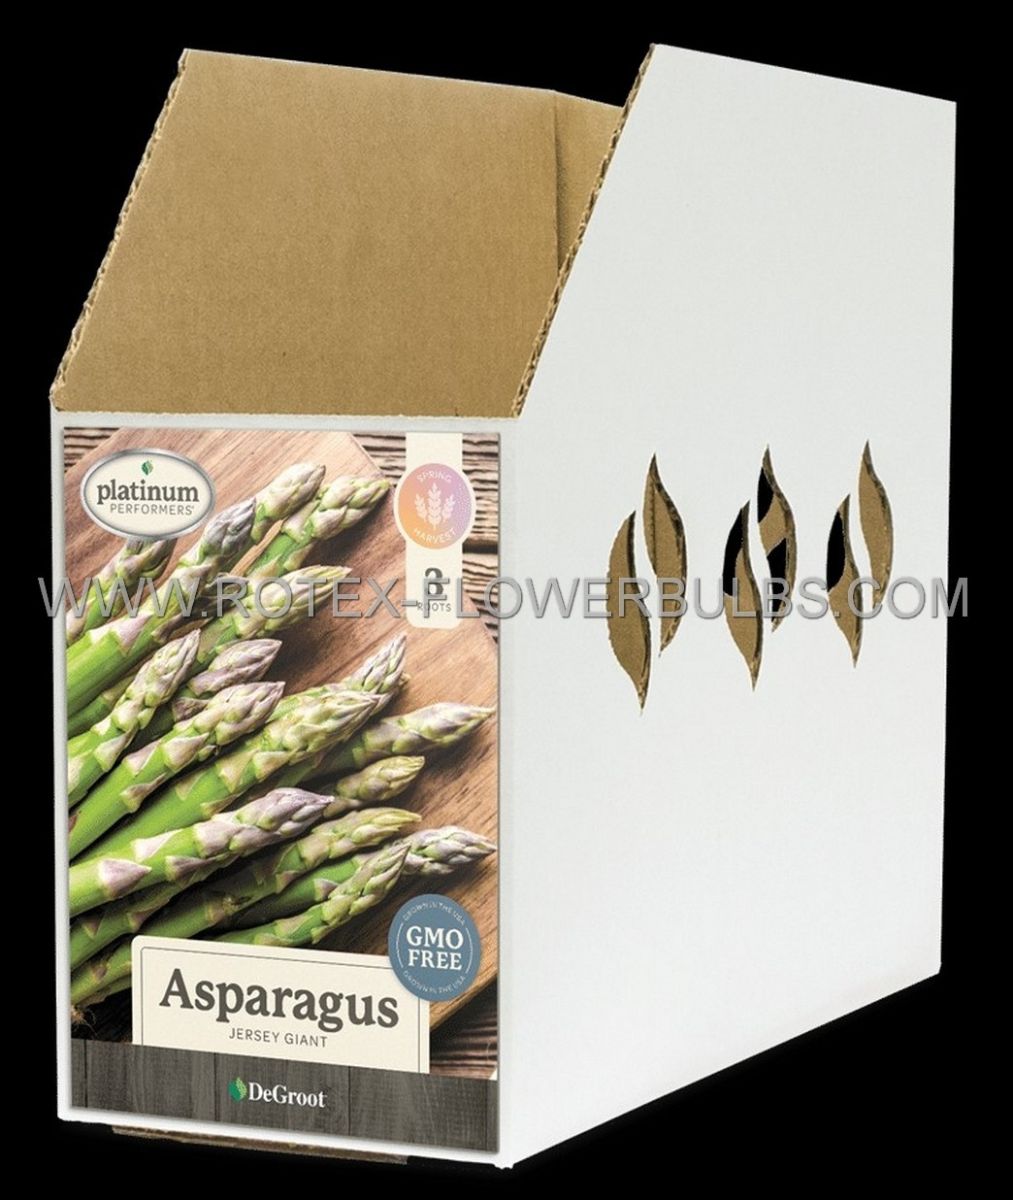 asparagus jersey giant 2yr as0130 15 pkgsx 3